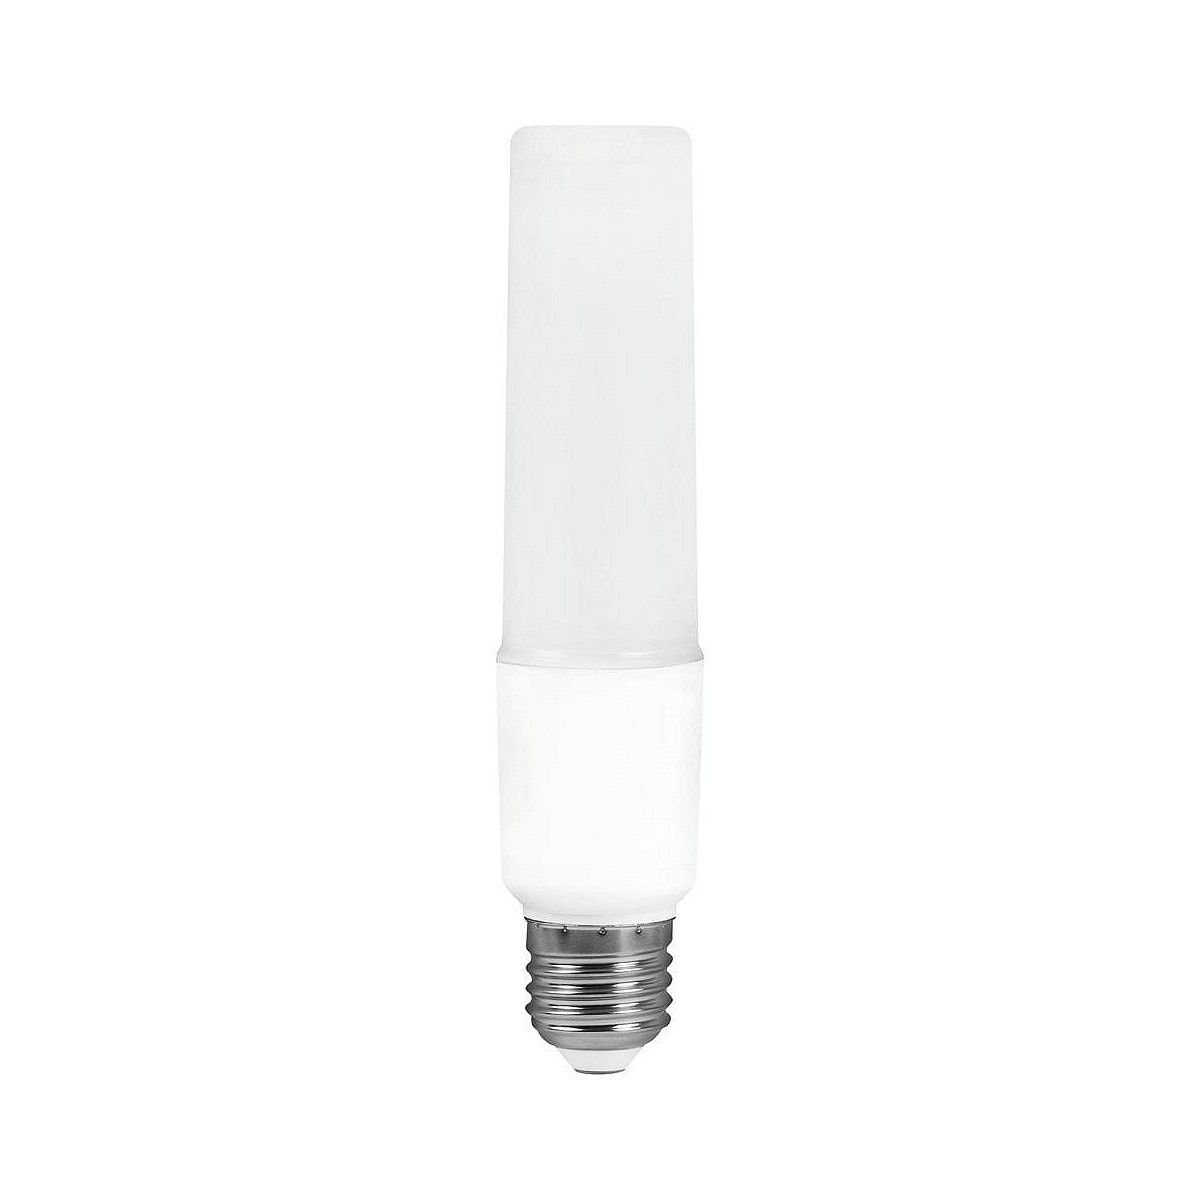 Compra BOMBILLA LED TUBULAR MATEL T37 E27 12W LUZ NEUTRA al mejor precio